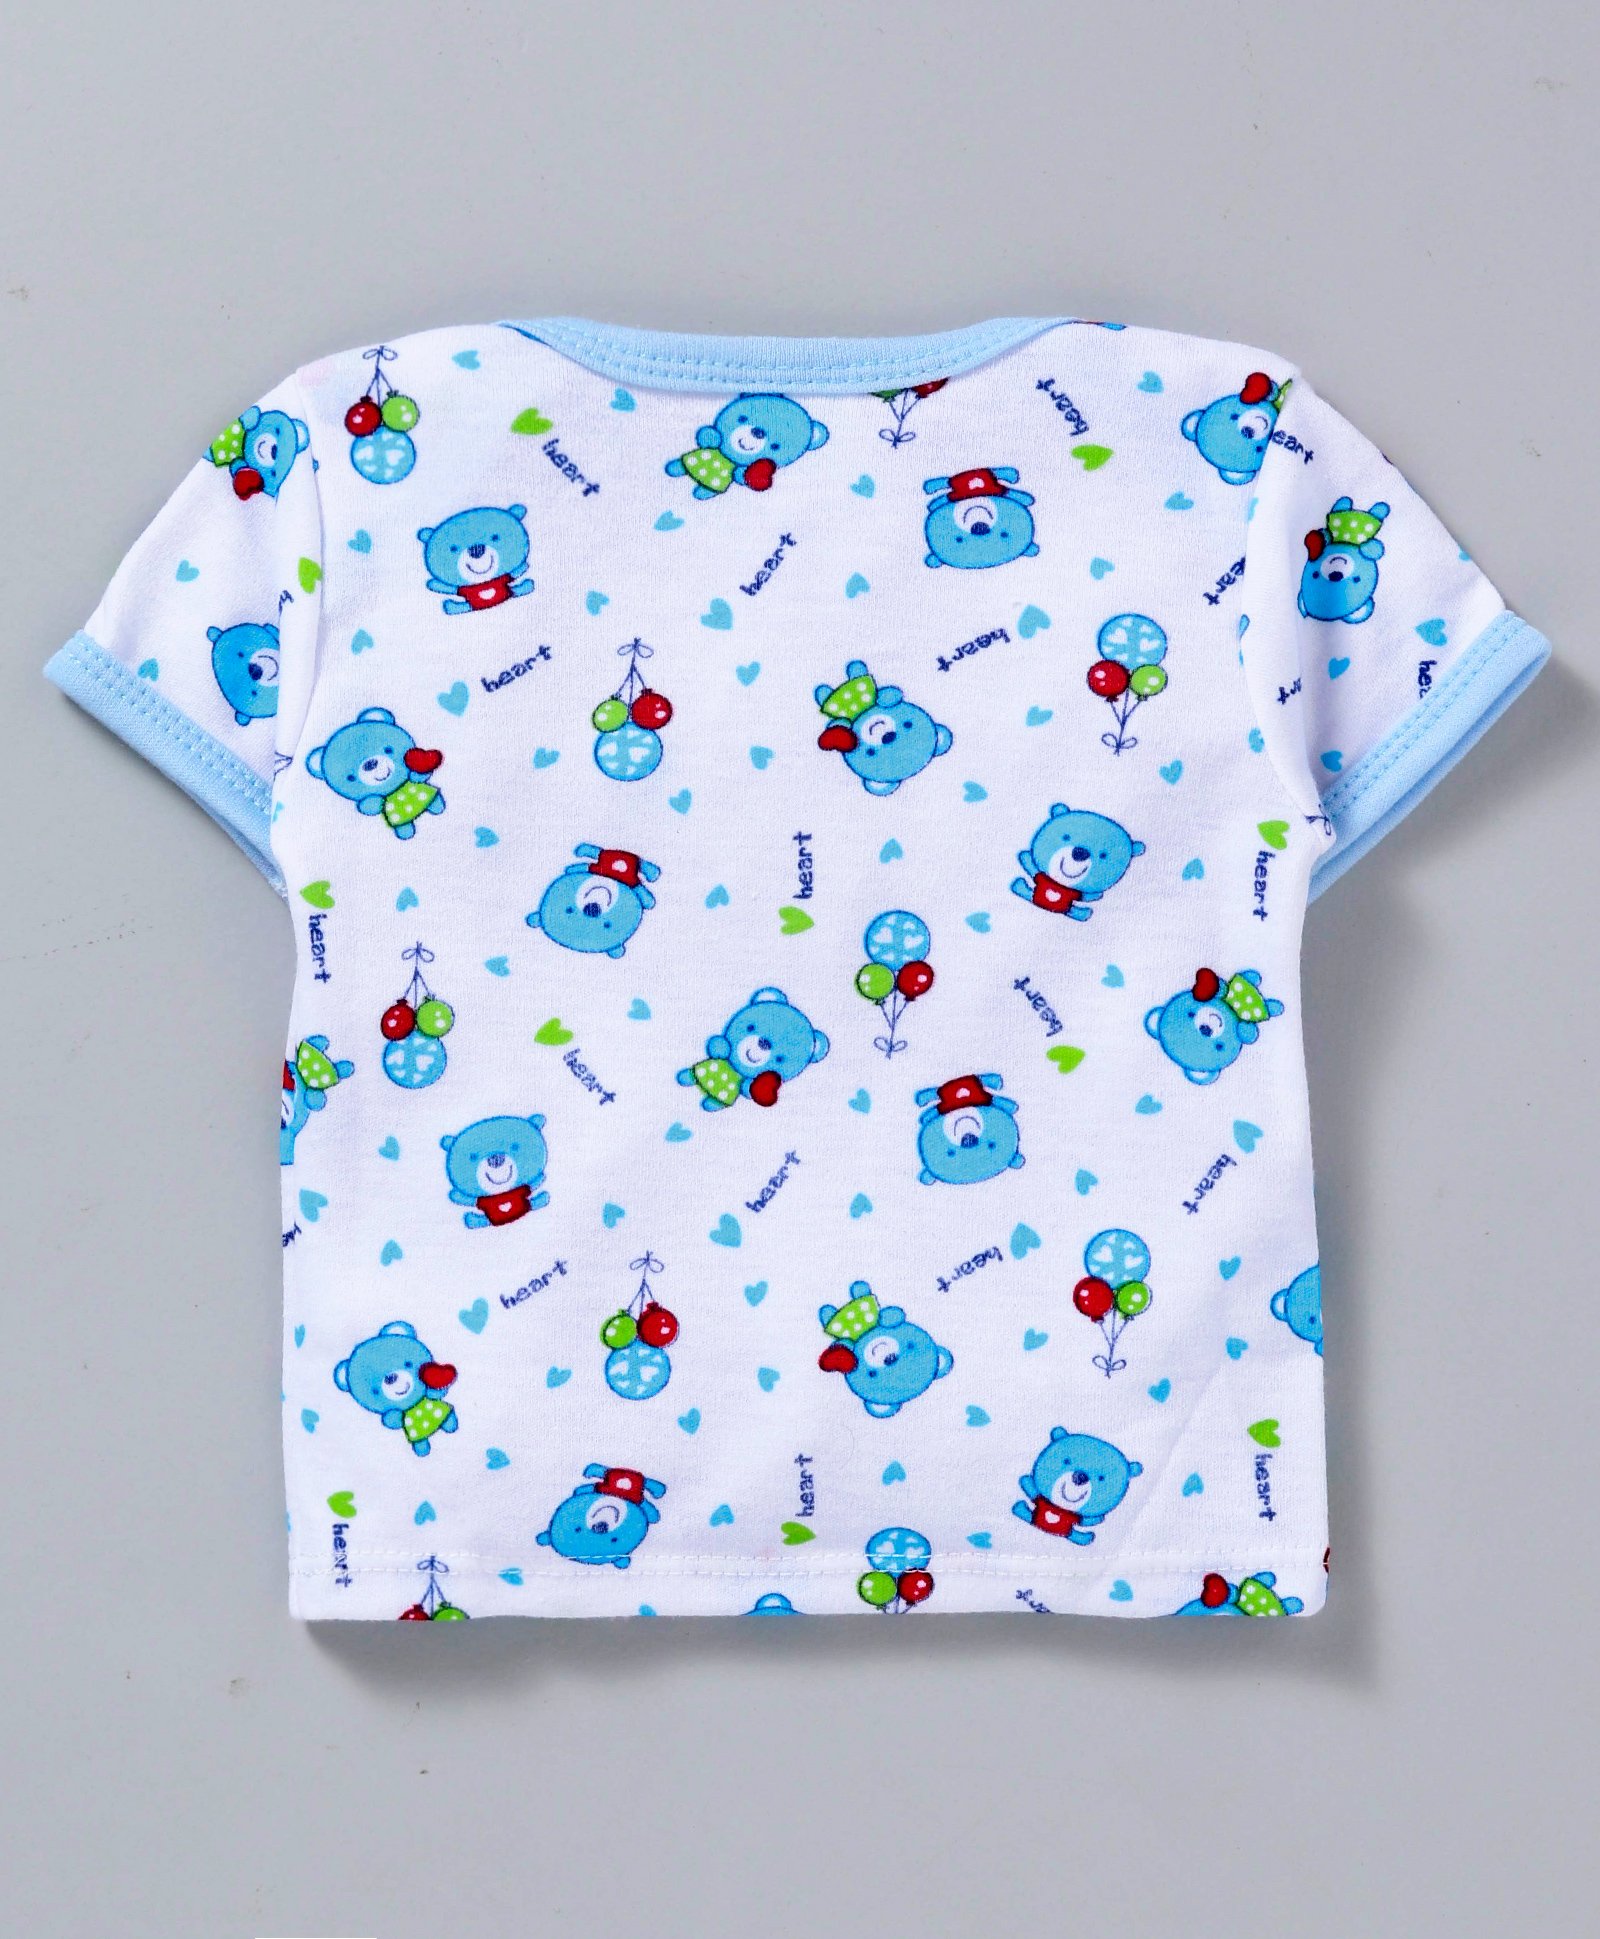 Active Shirt - 1600x1939 Wallpaper - teahub.io